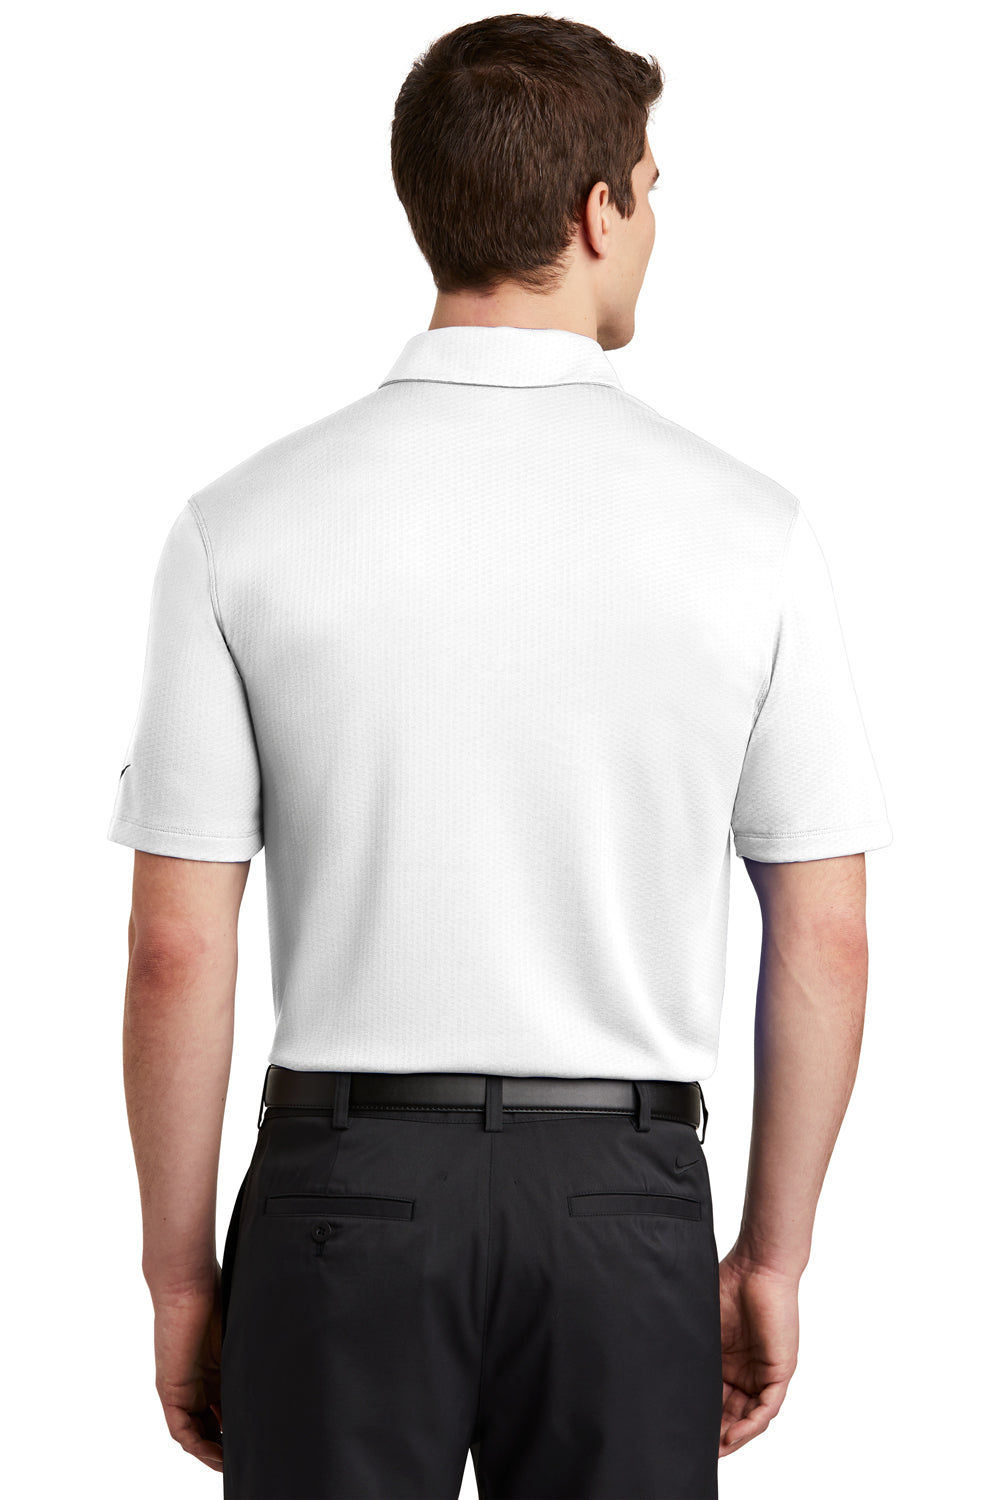 Nike NKAH6266 Mens Dri-Fit Moisture Wicking Short Sleeve Polo Shirt White Model Back